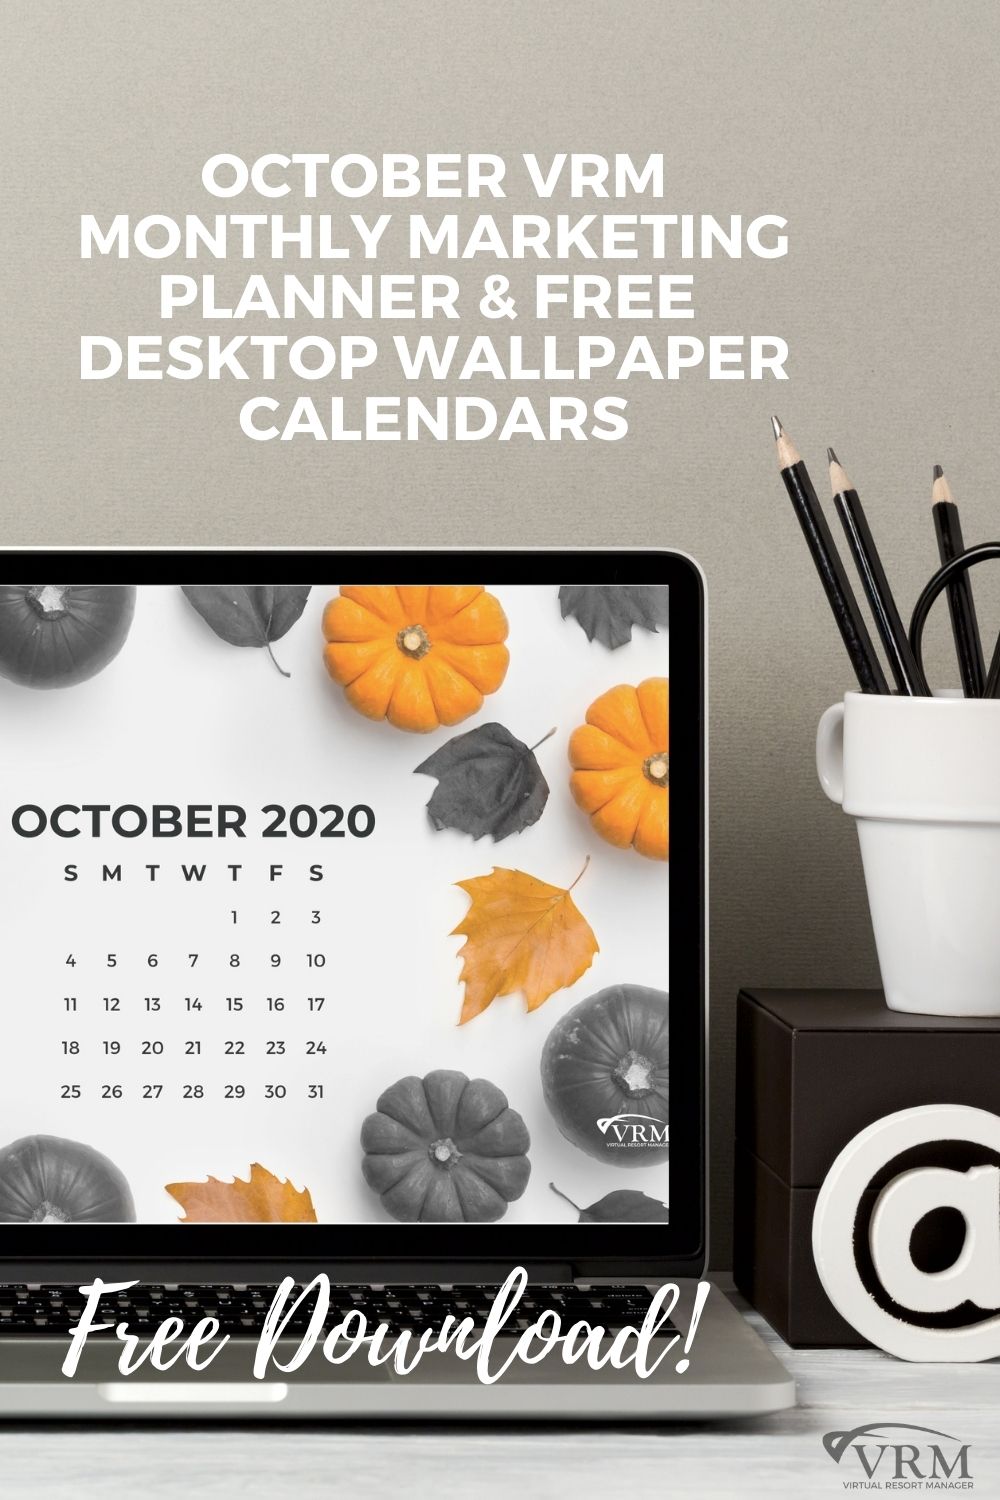 October VRM Monthly Marketing Planner and Free Desktop Wallpaper Calendars